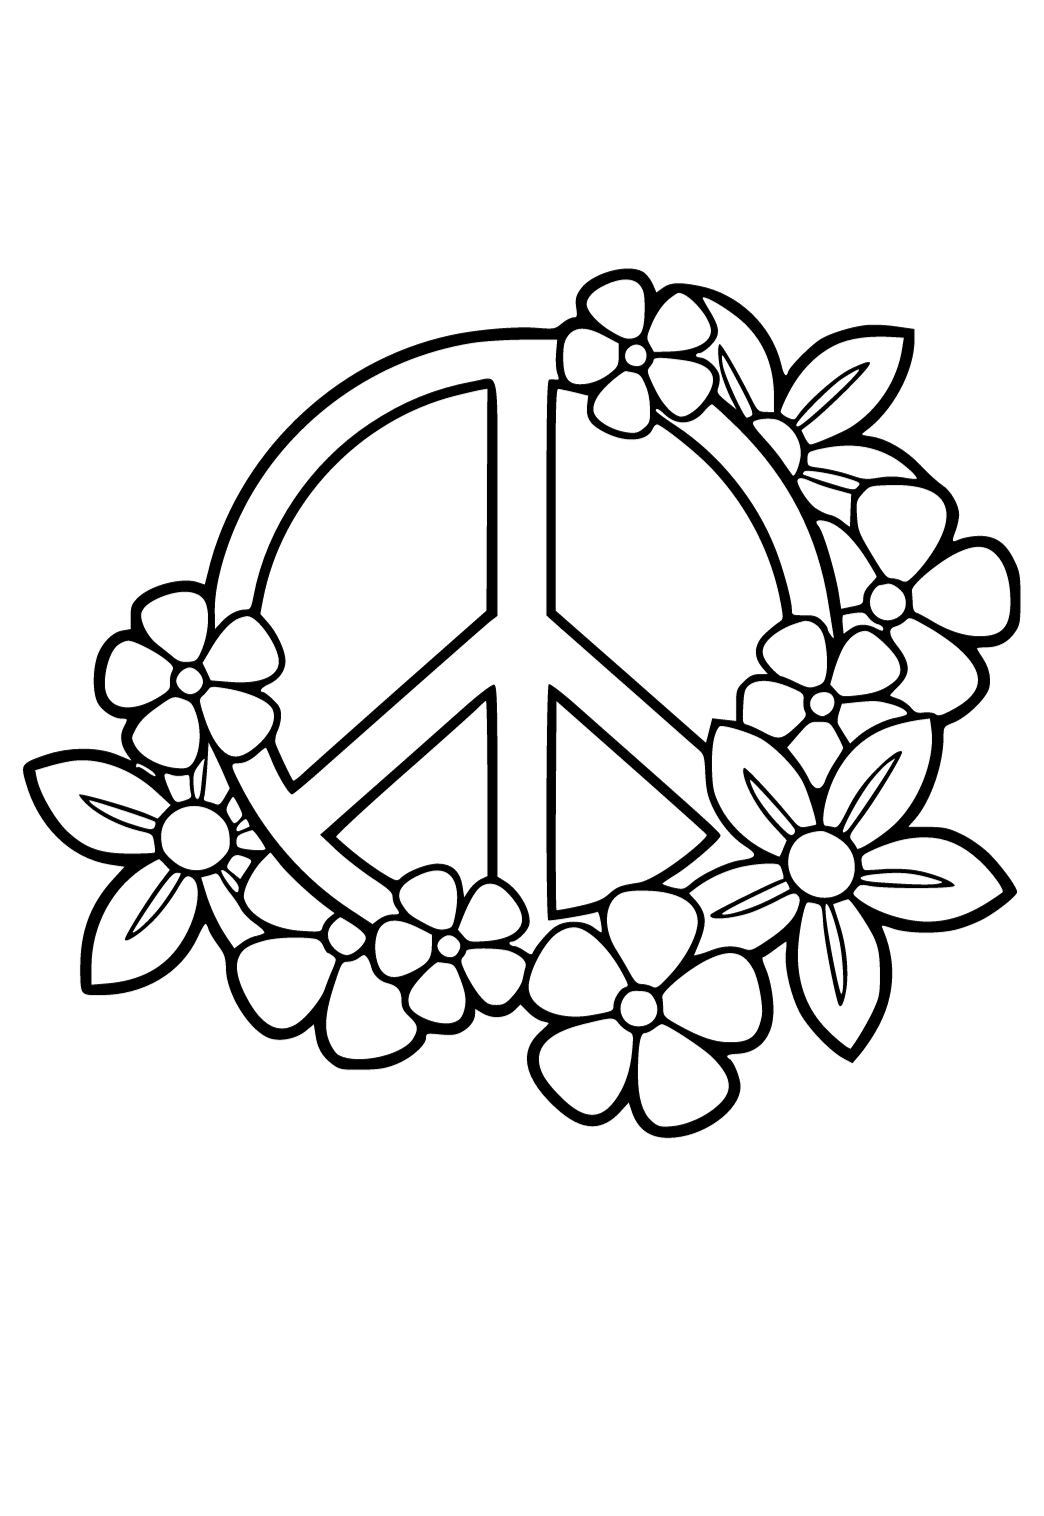 Знак на Мира